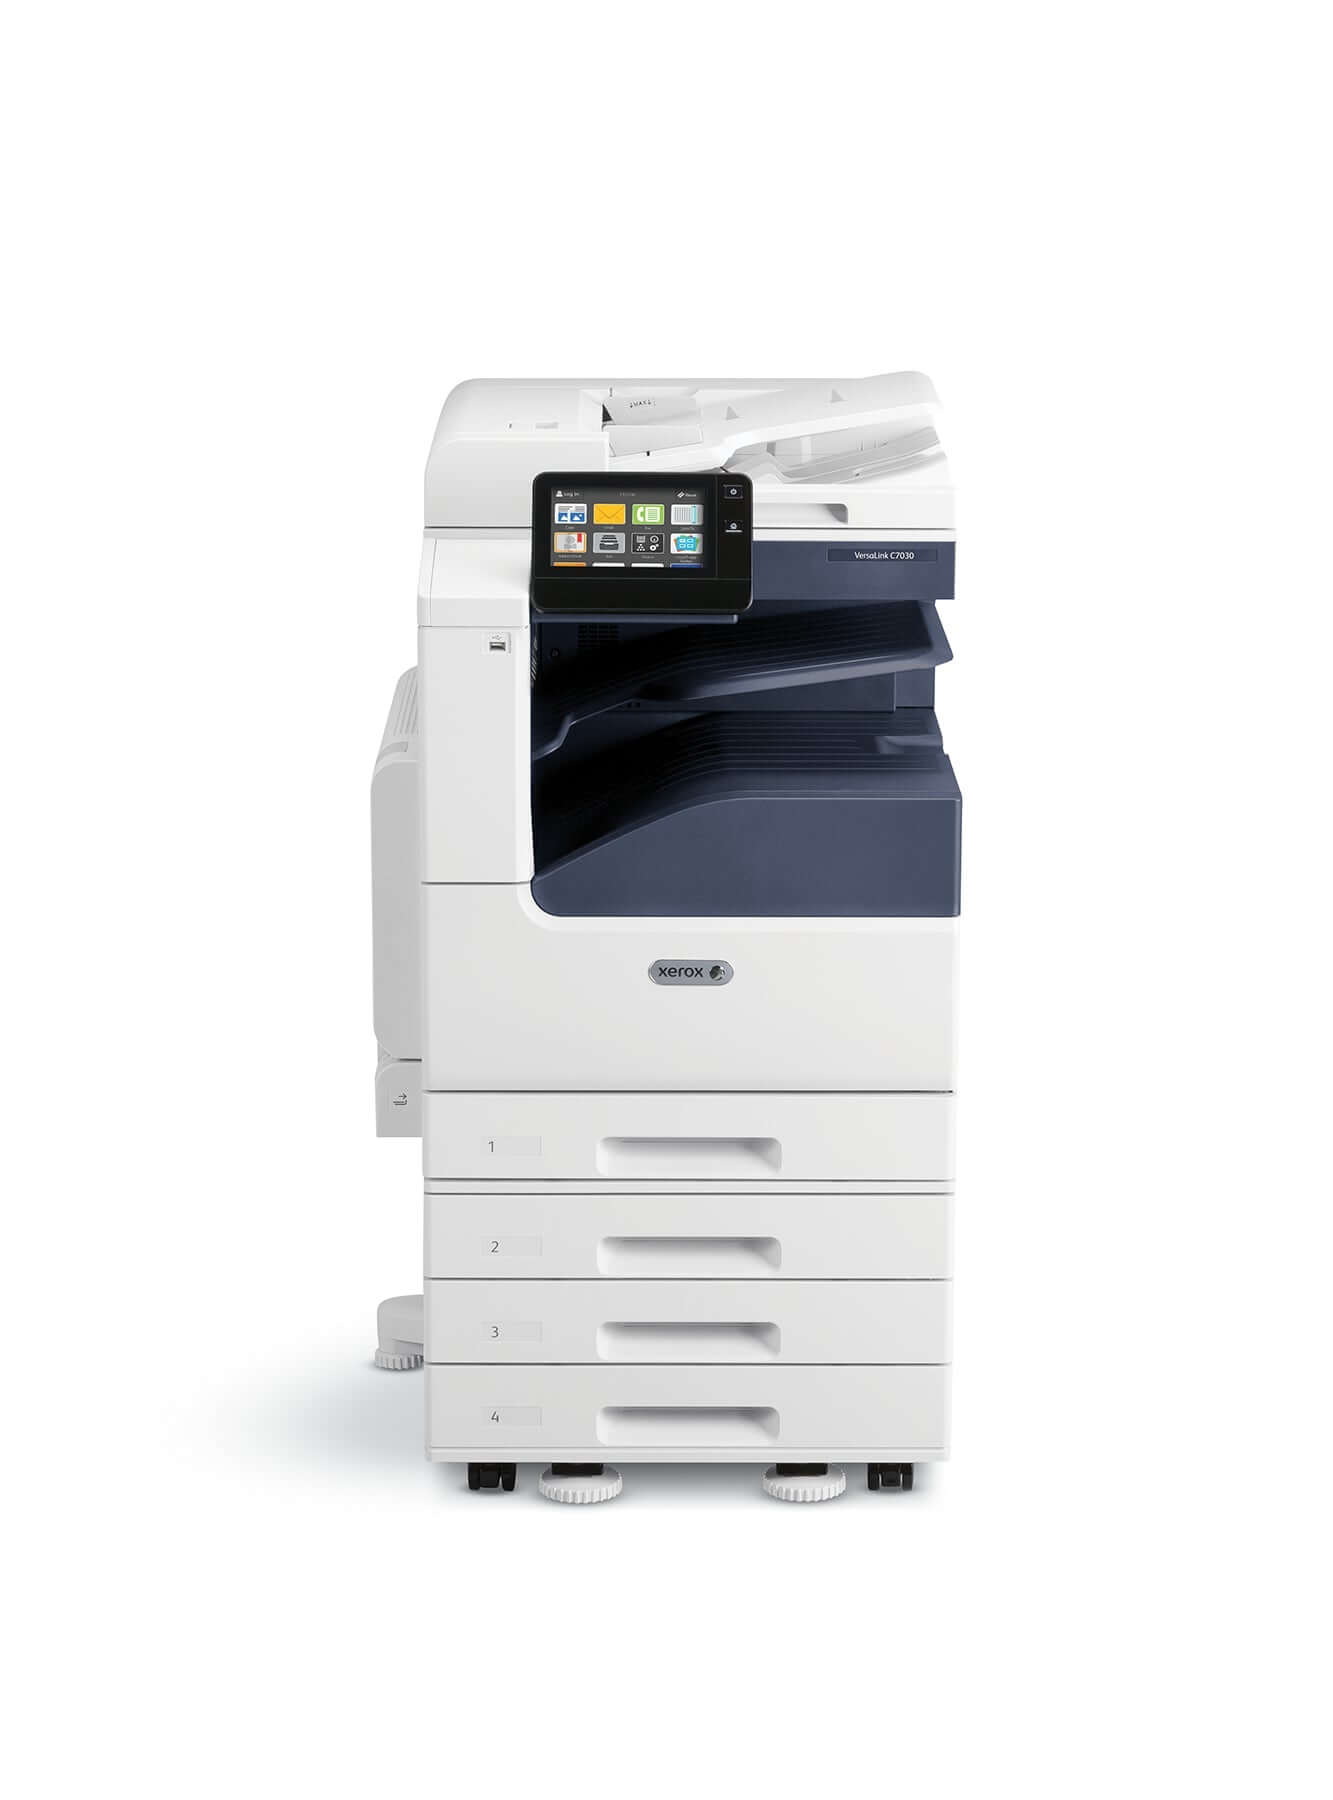 Xerox VersaLink C7025 Colour MultiFunction Printer - 4 trays - PreOwned + Warranty